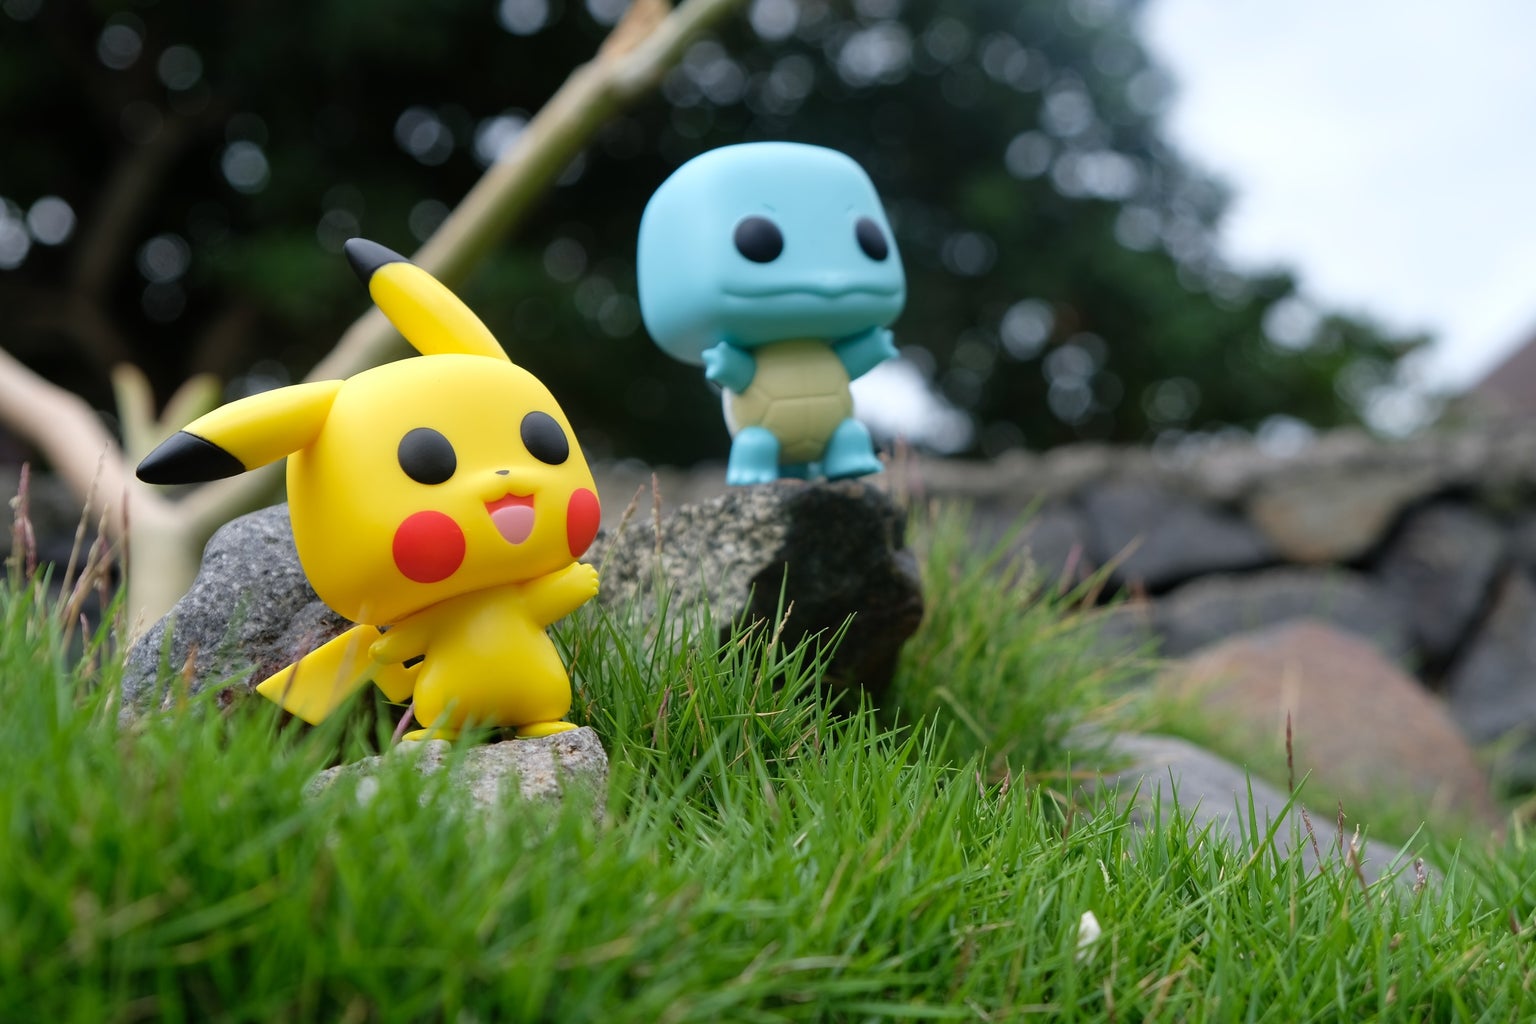 pokémon pop figures in the grass